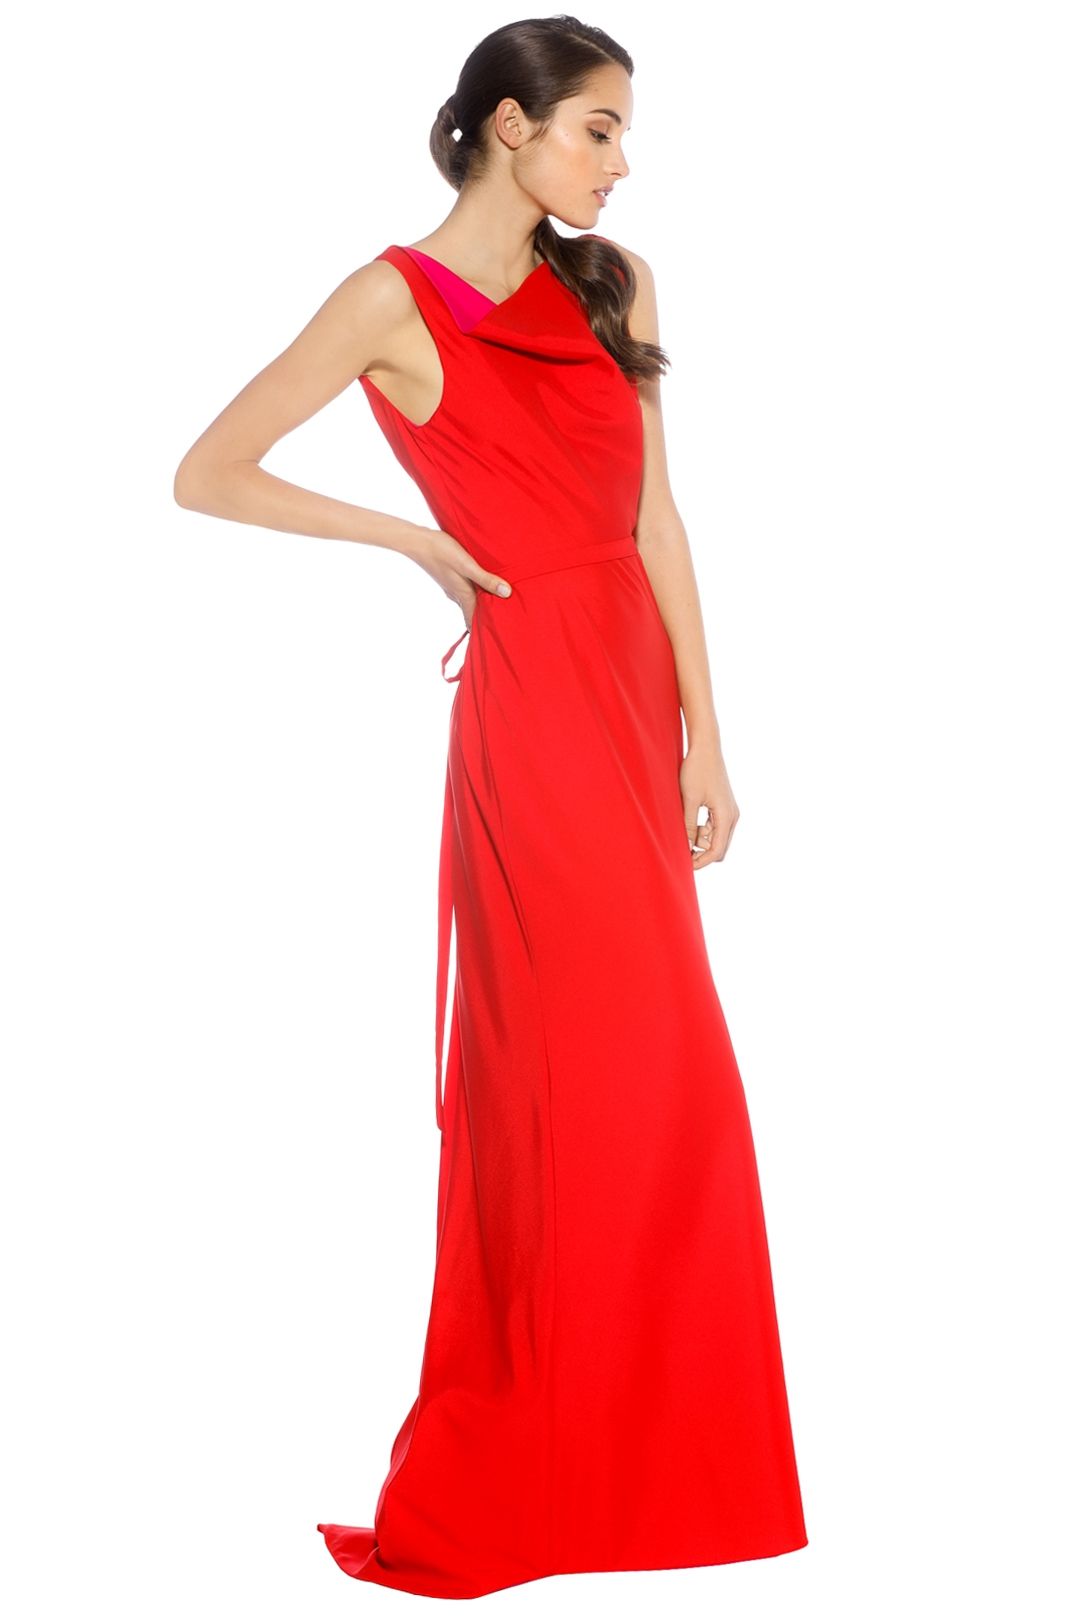 LUOM.O - Paloma Dress - Red - Side